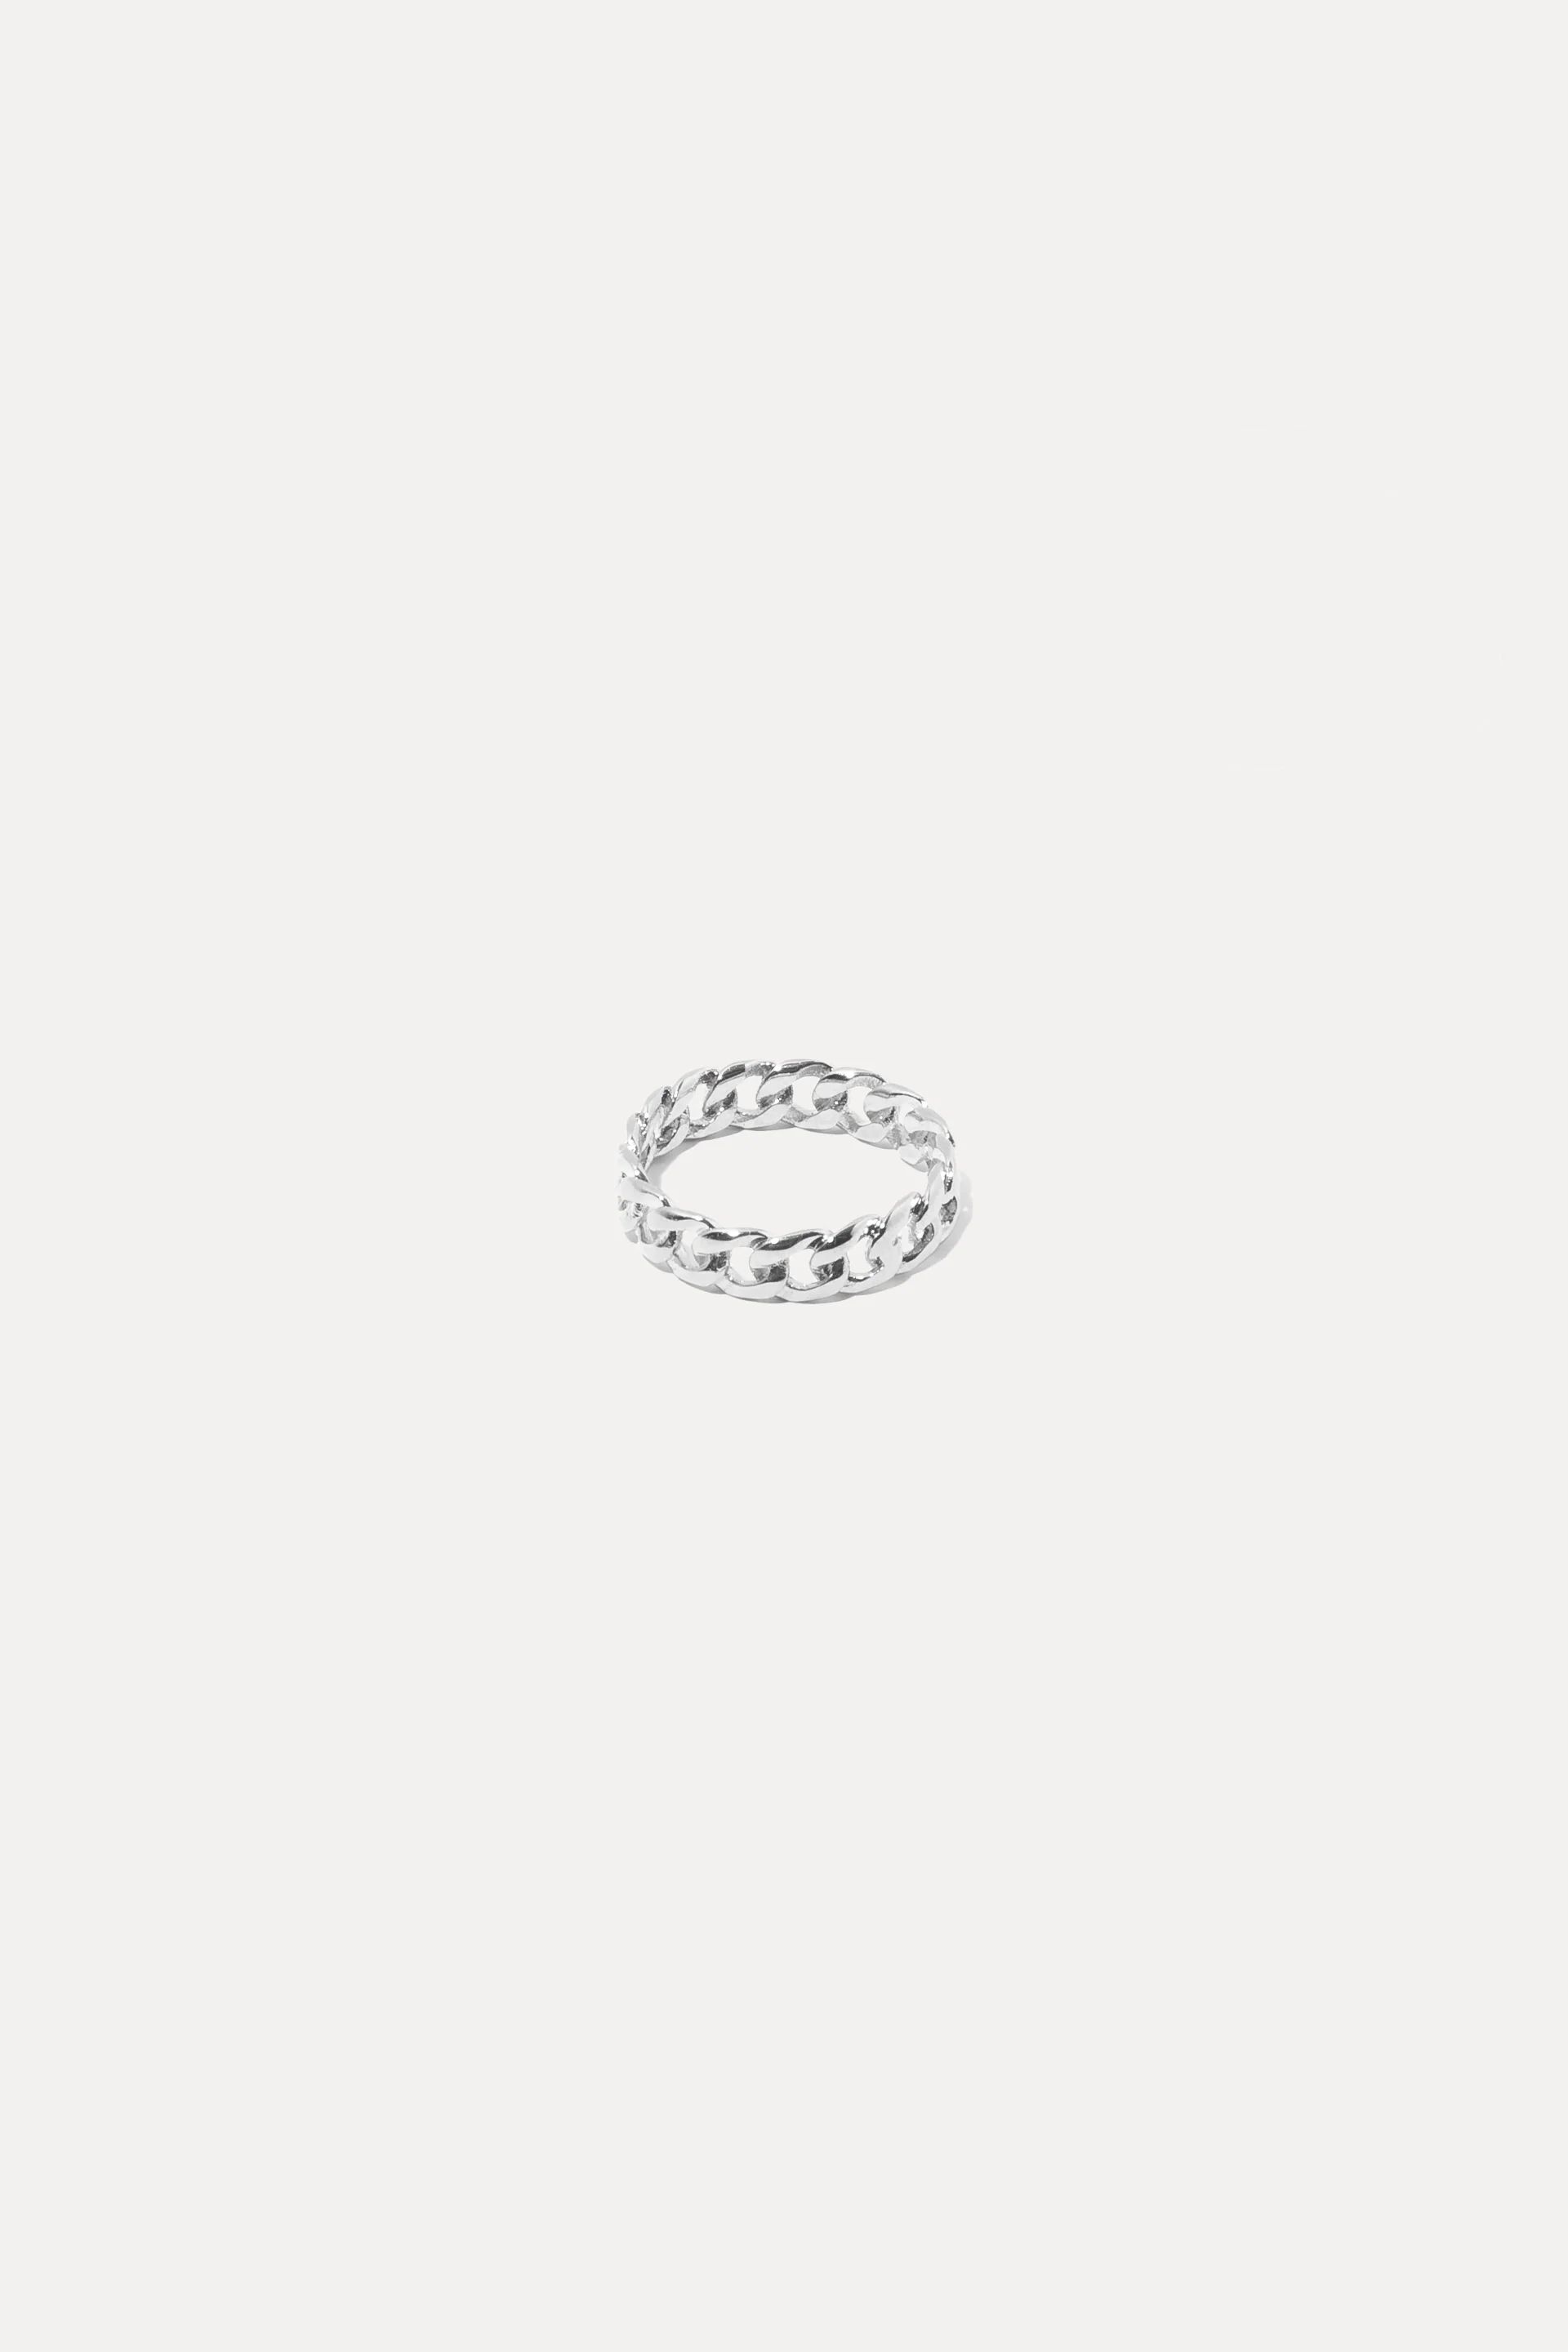 Rowen Ring | Miranda Frye Inc.